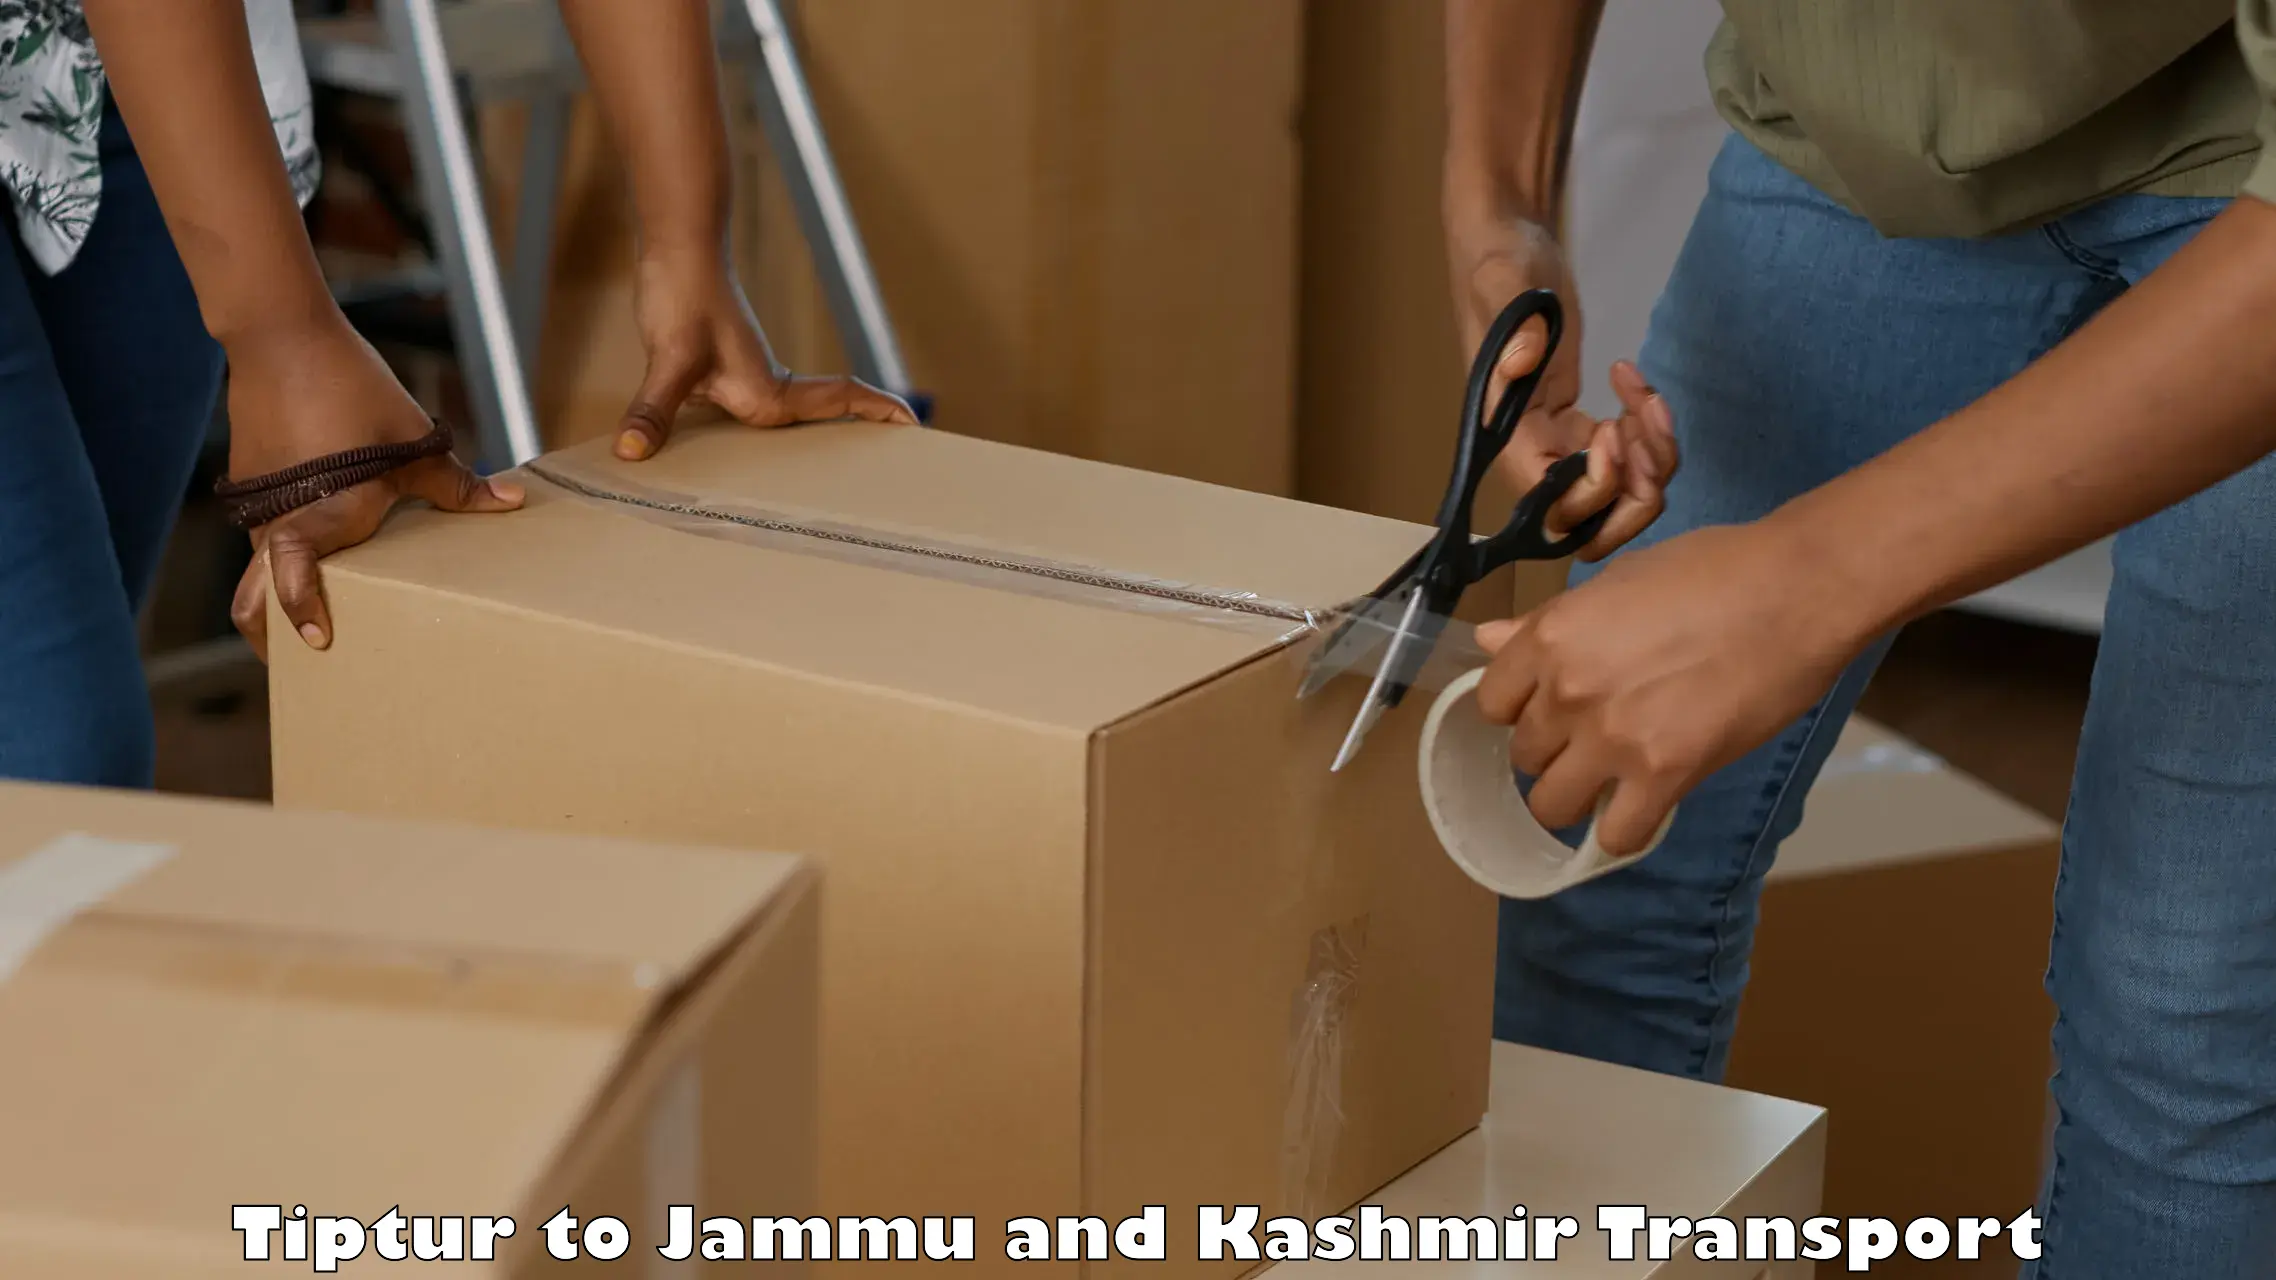 Transport in sharing Tiptur to University of Jammu